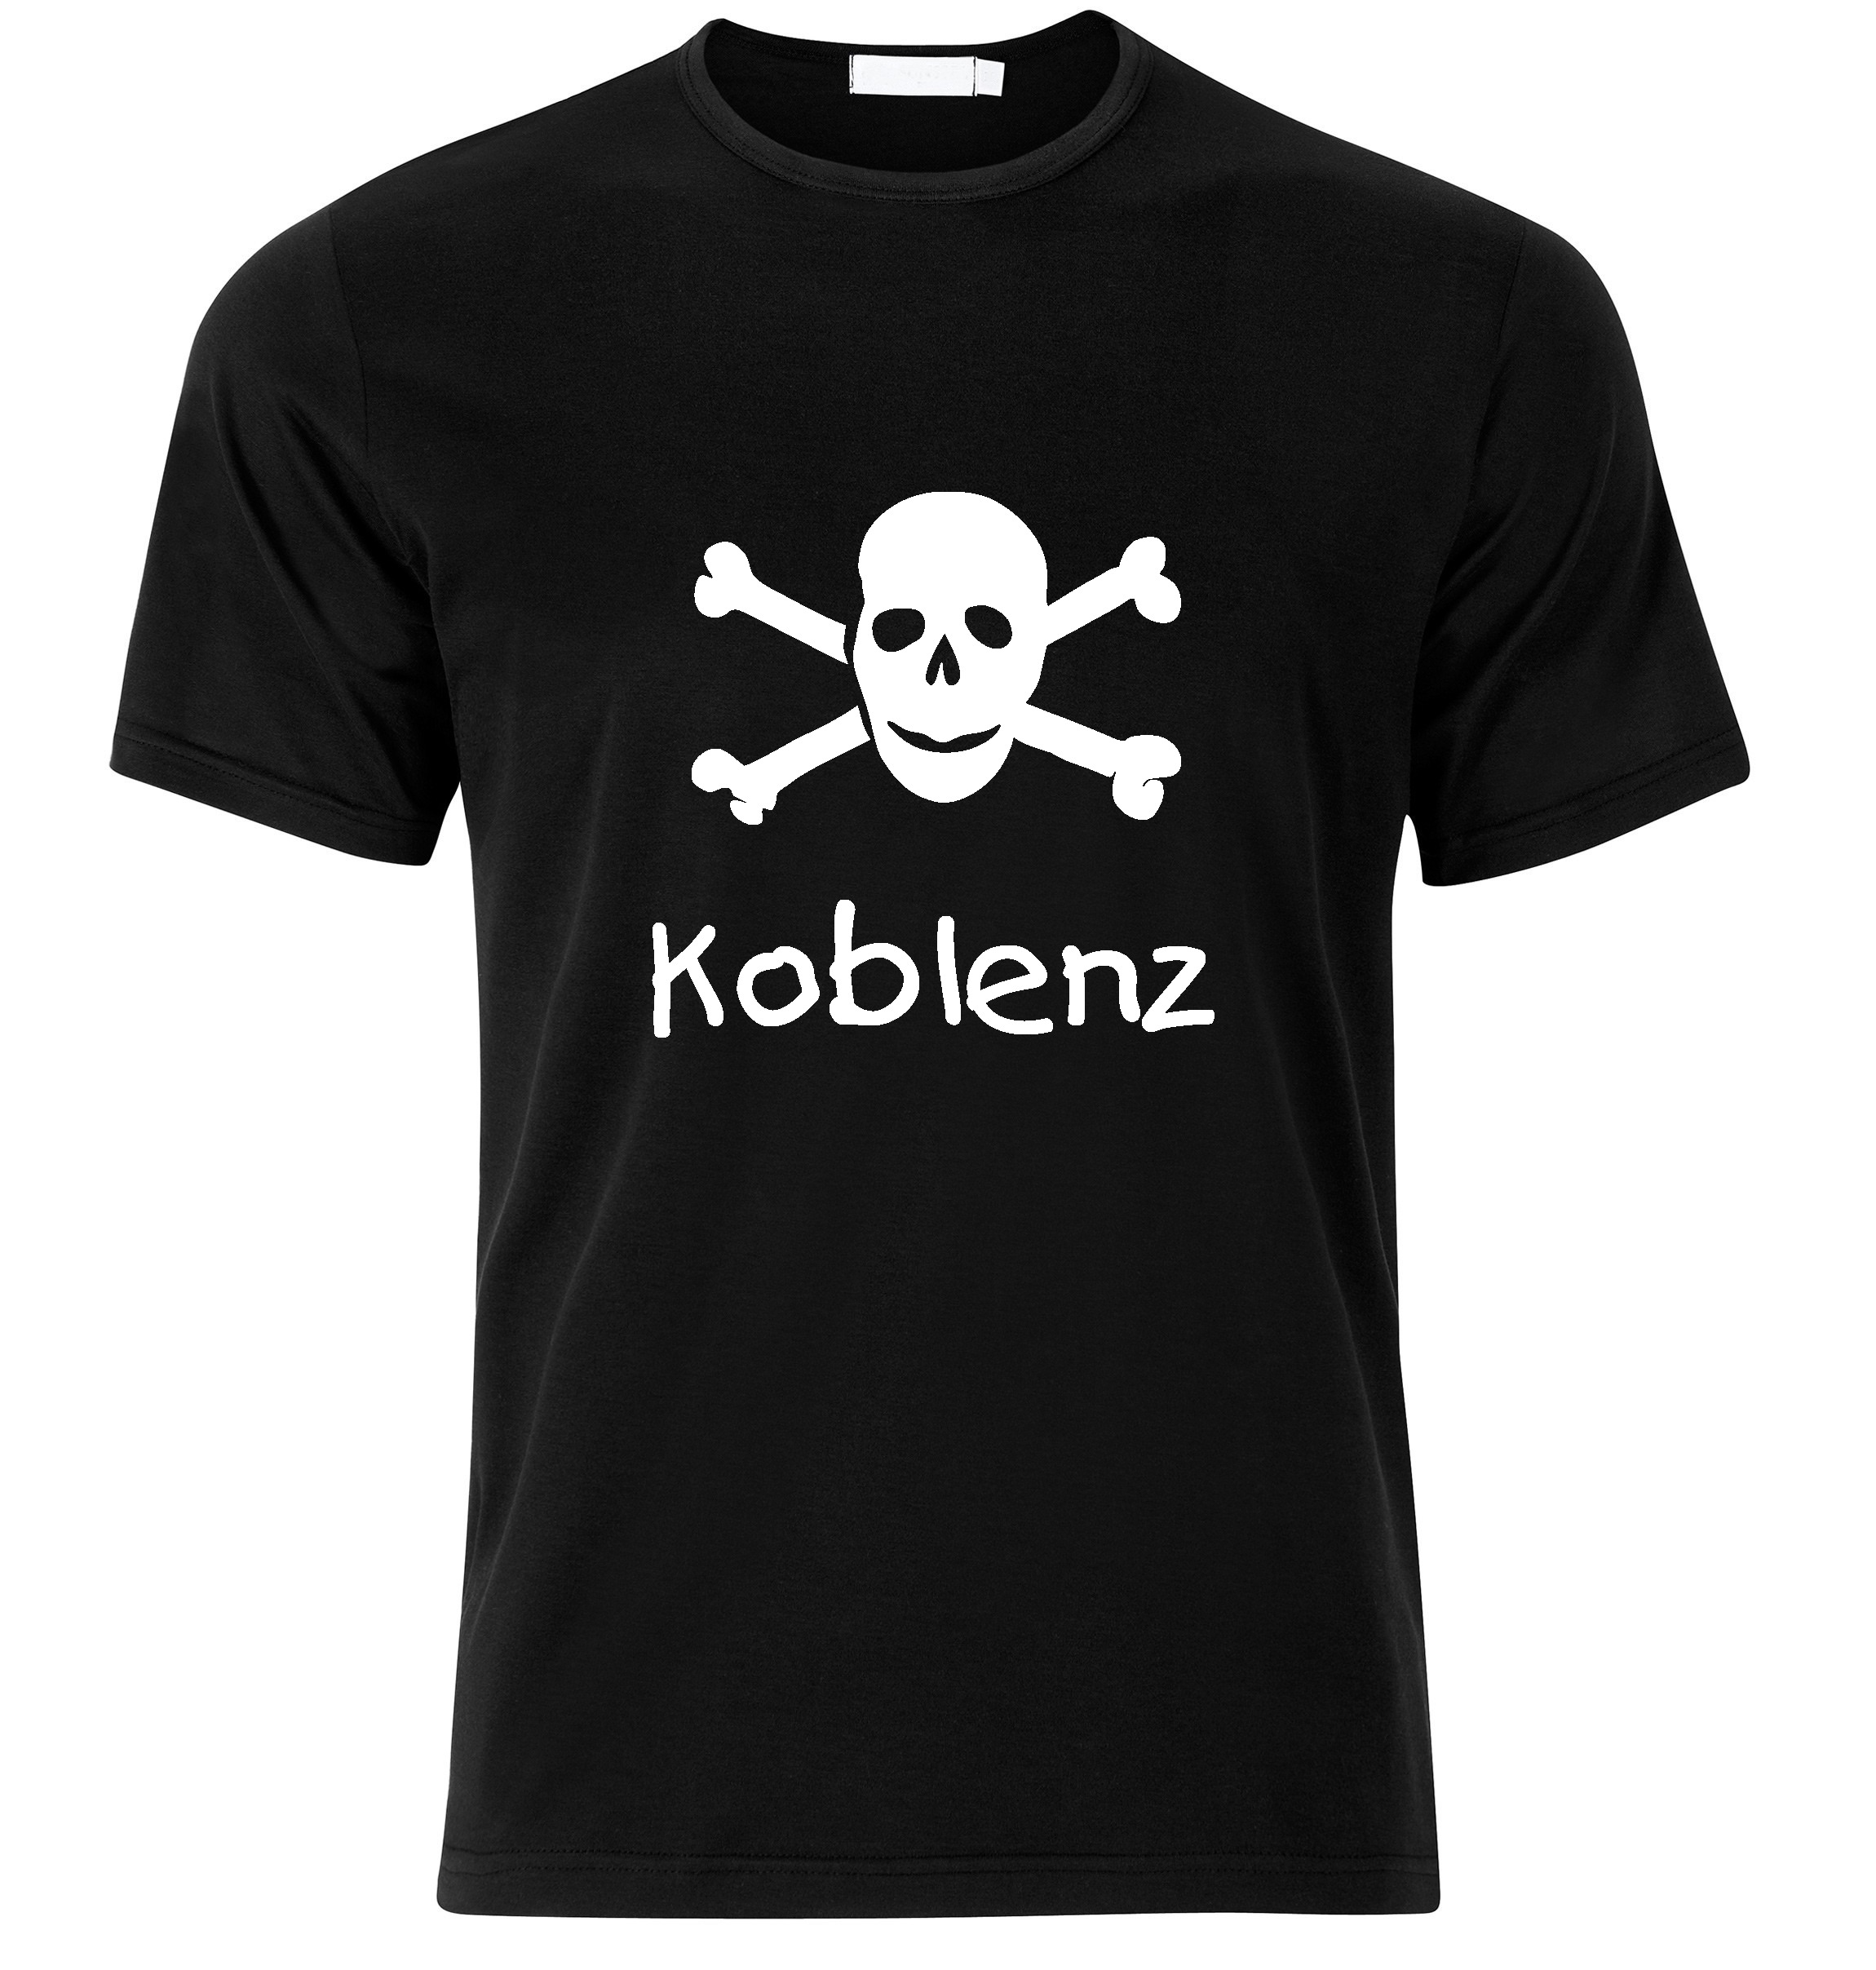 T-Shirt Koblenz Jolly Roger, Totenkopf